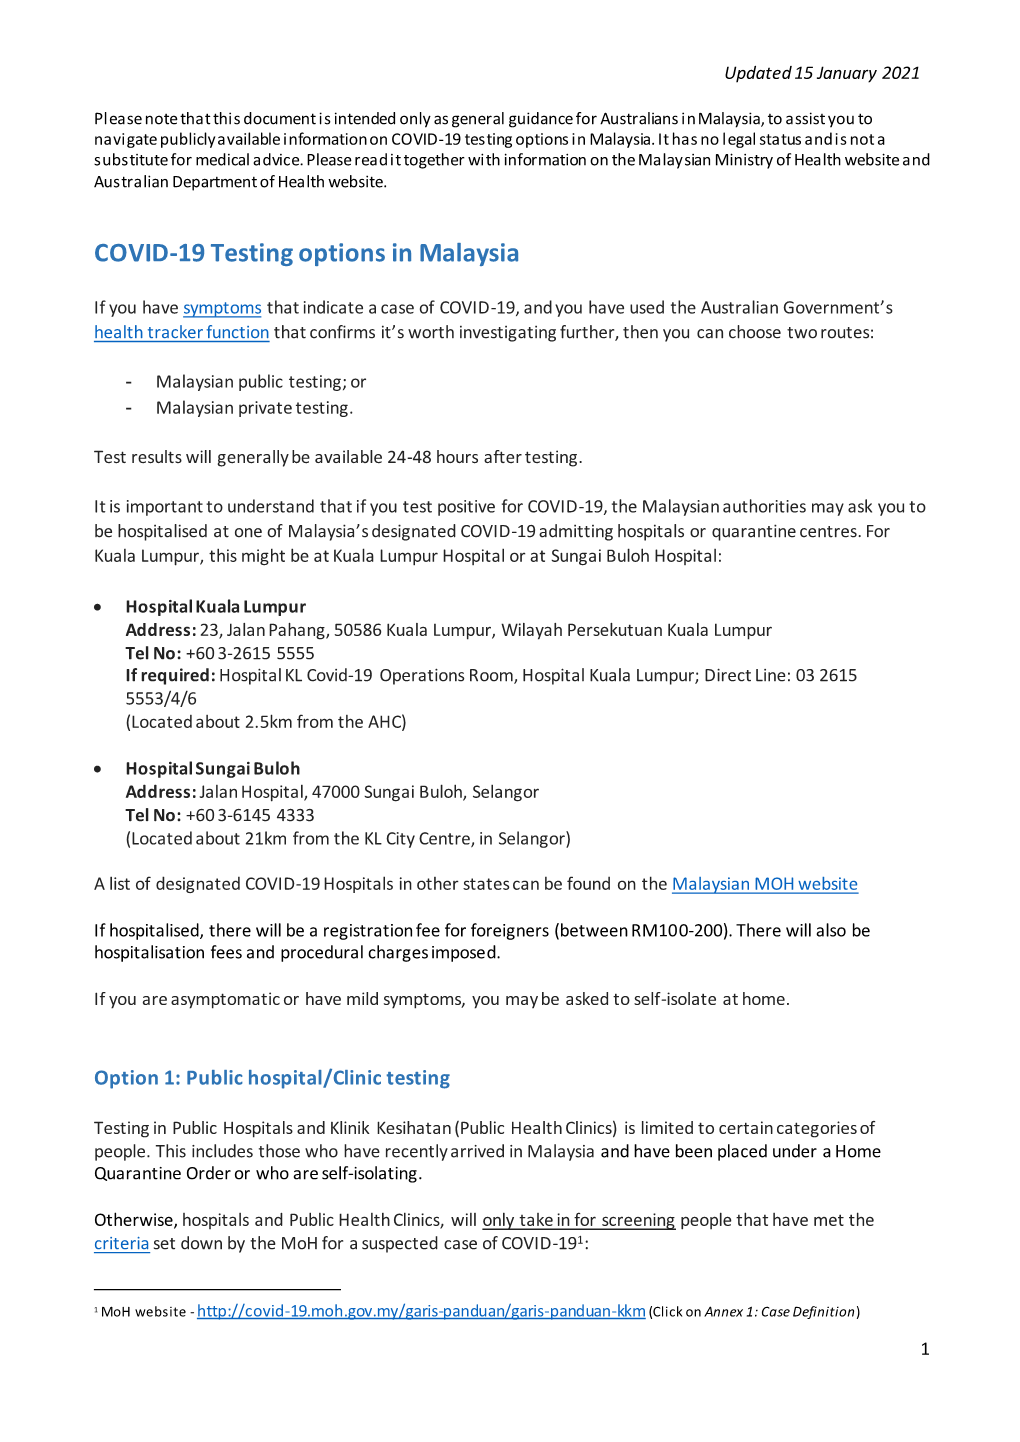 COVID-19 Testing Options in Malaysia